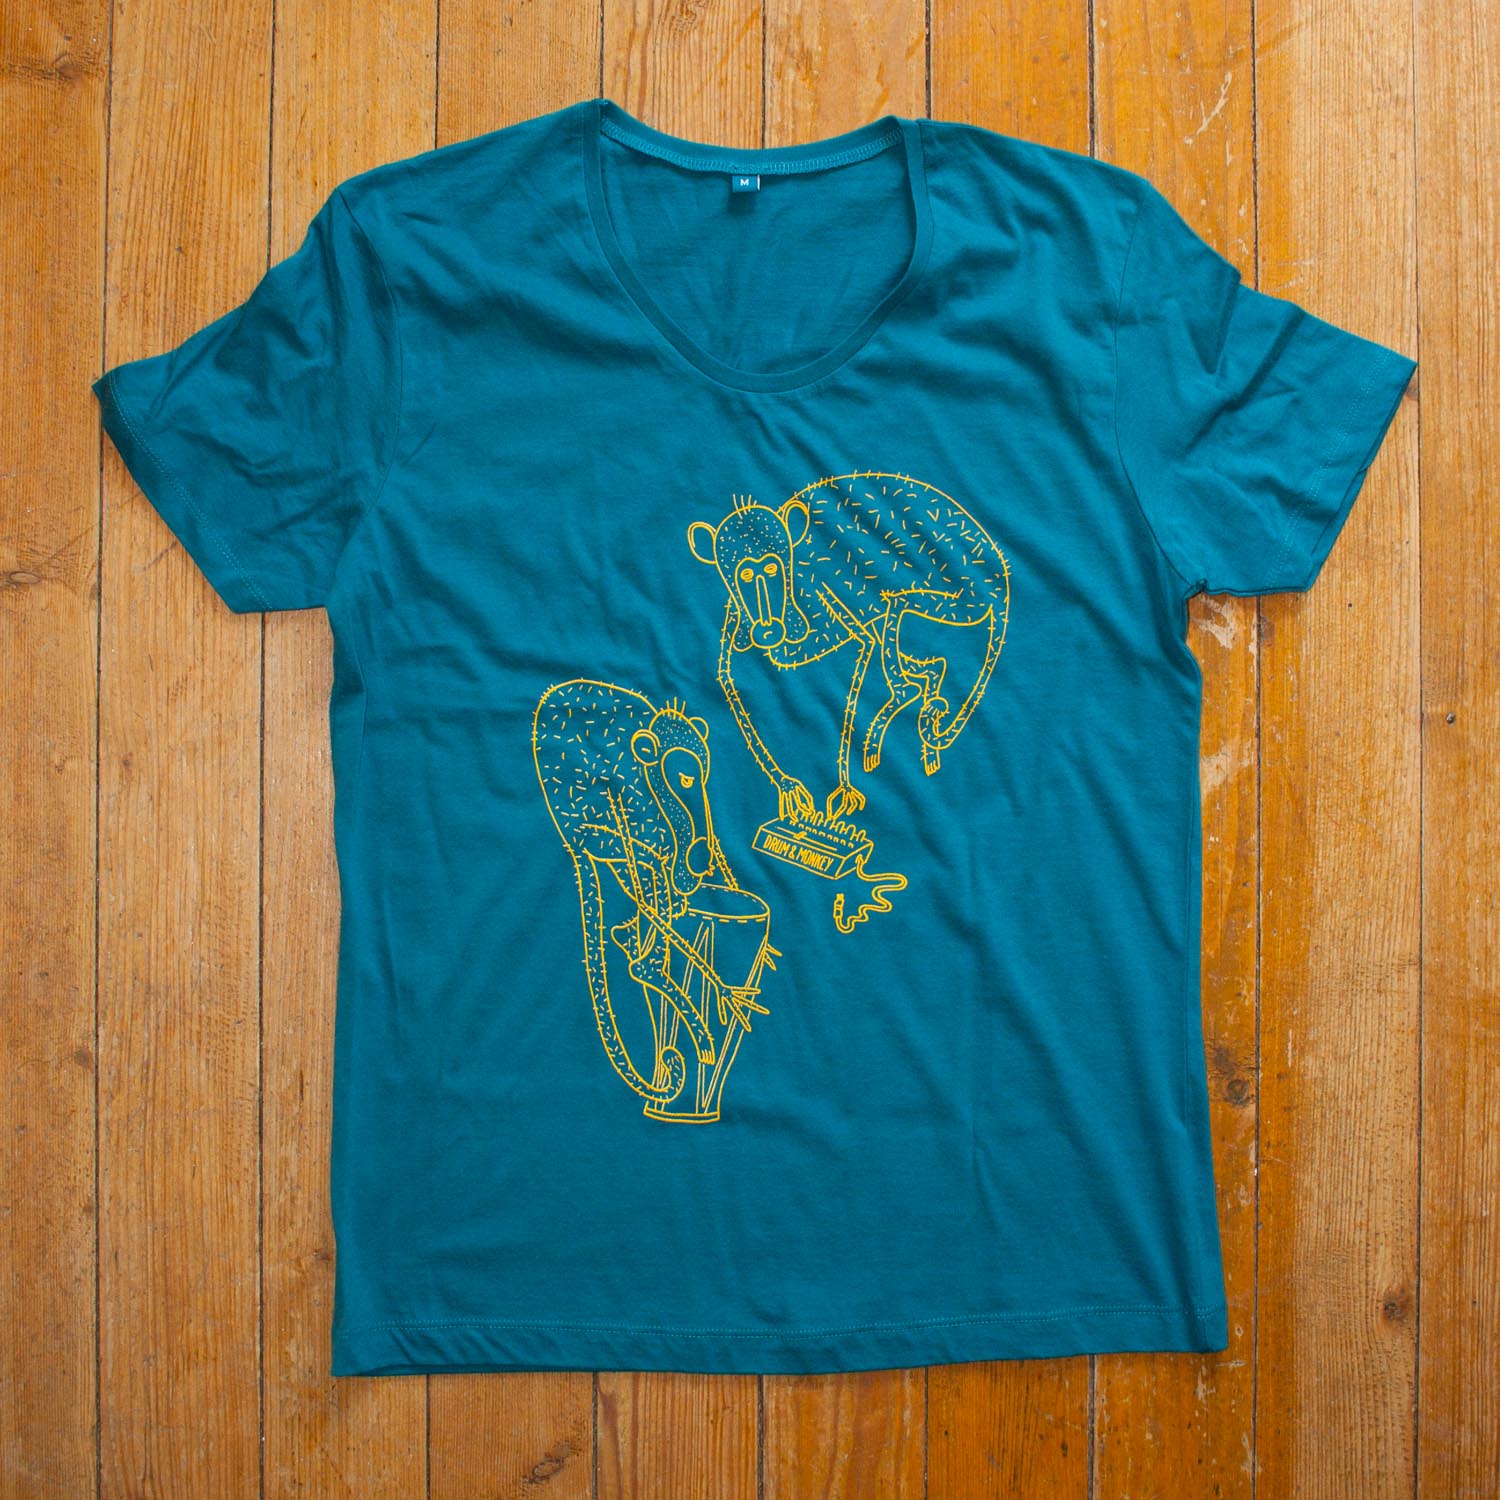 Drum and Monkey Apes T-Shirt blau